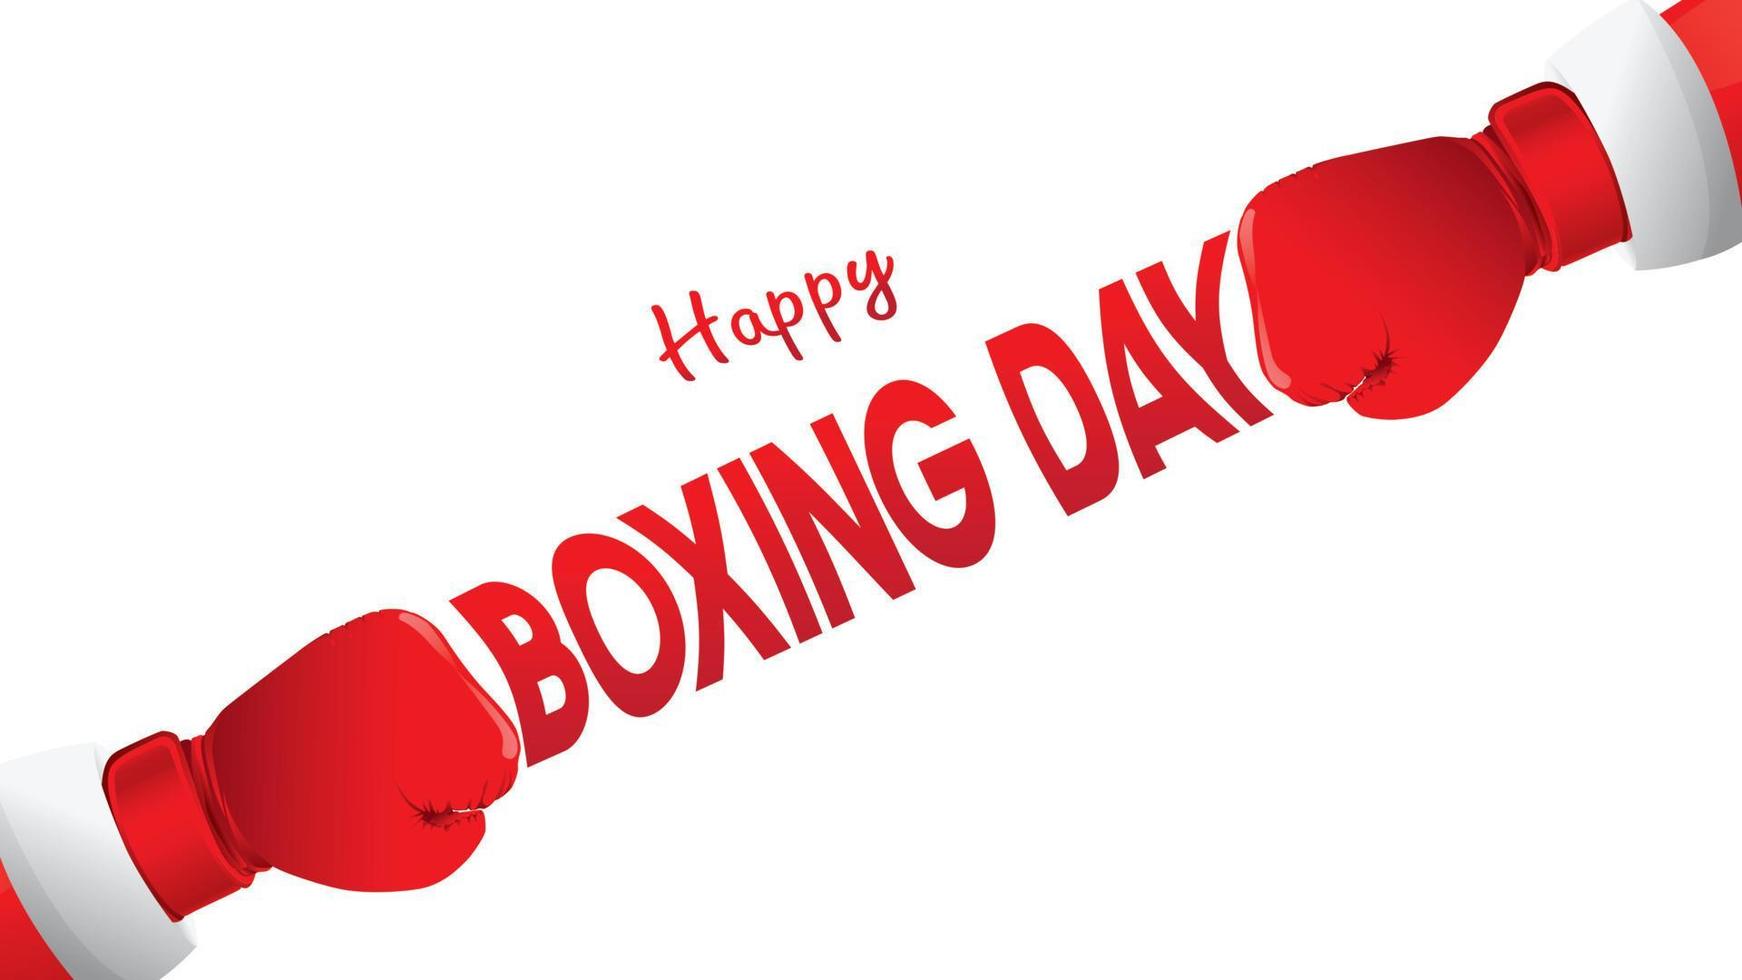 boxing day vector illustration.typography kombiniert in form von boxhandschuhen